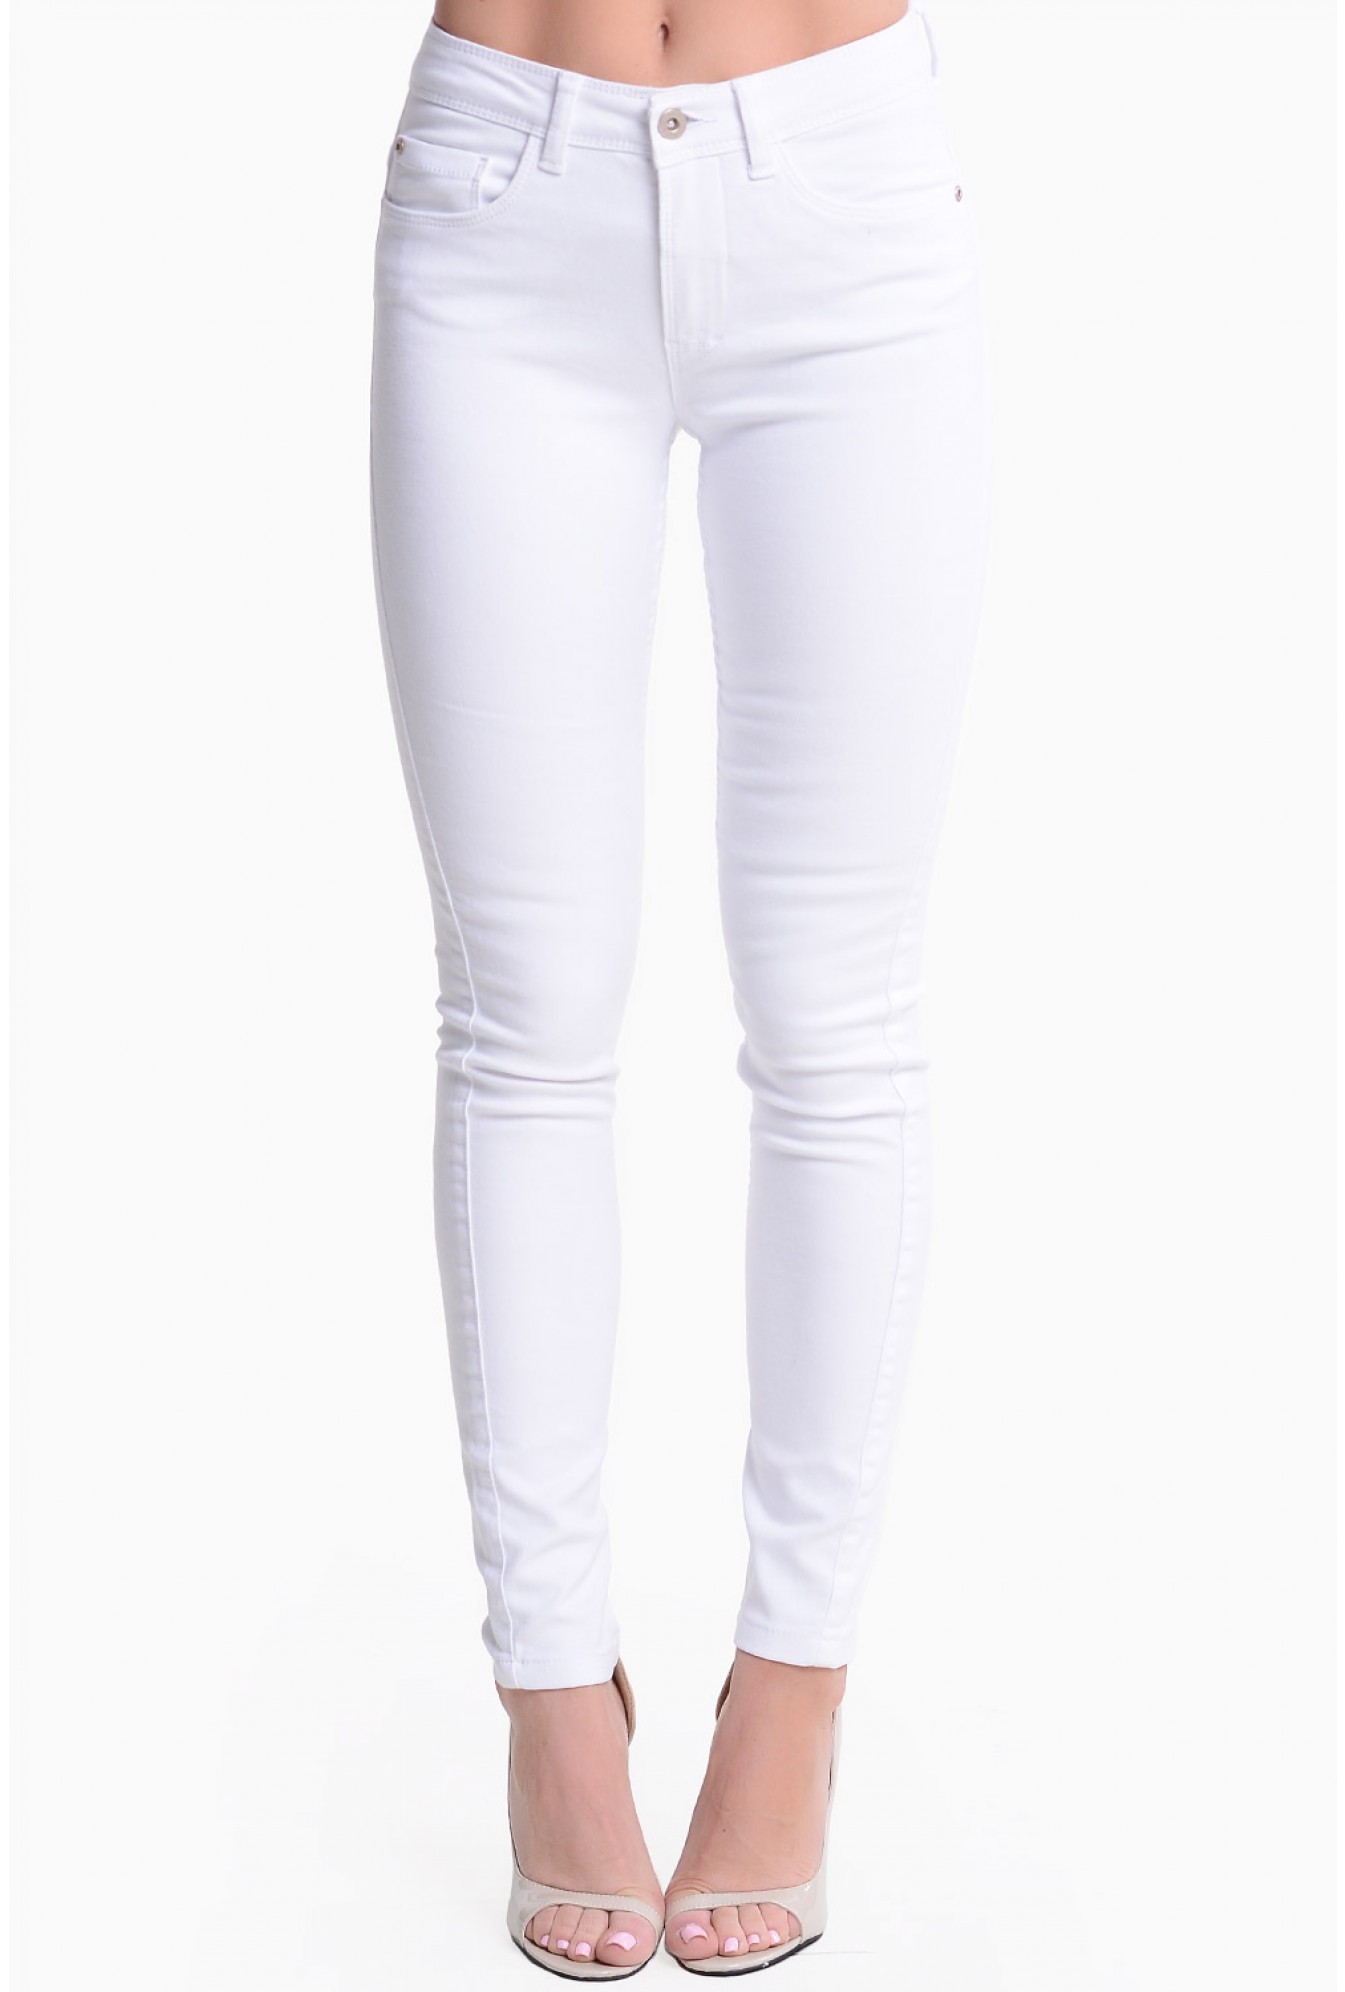 white soft jeans